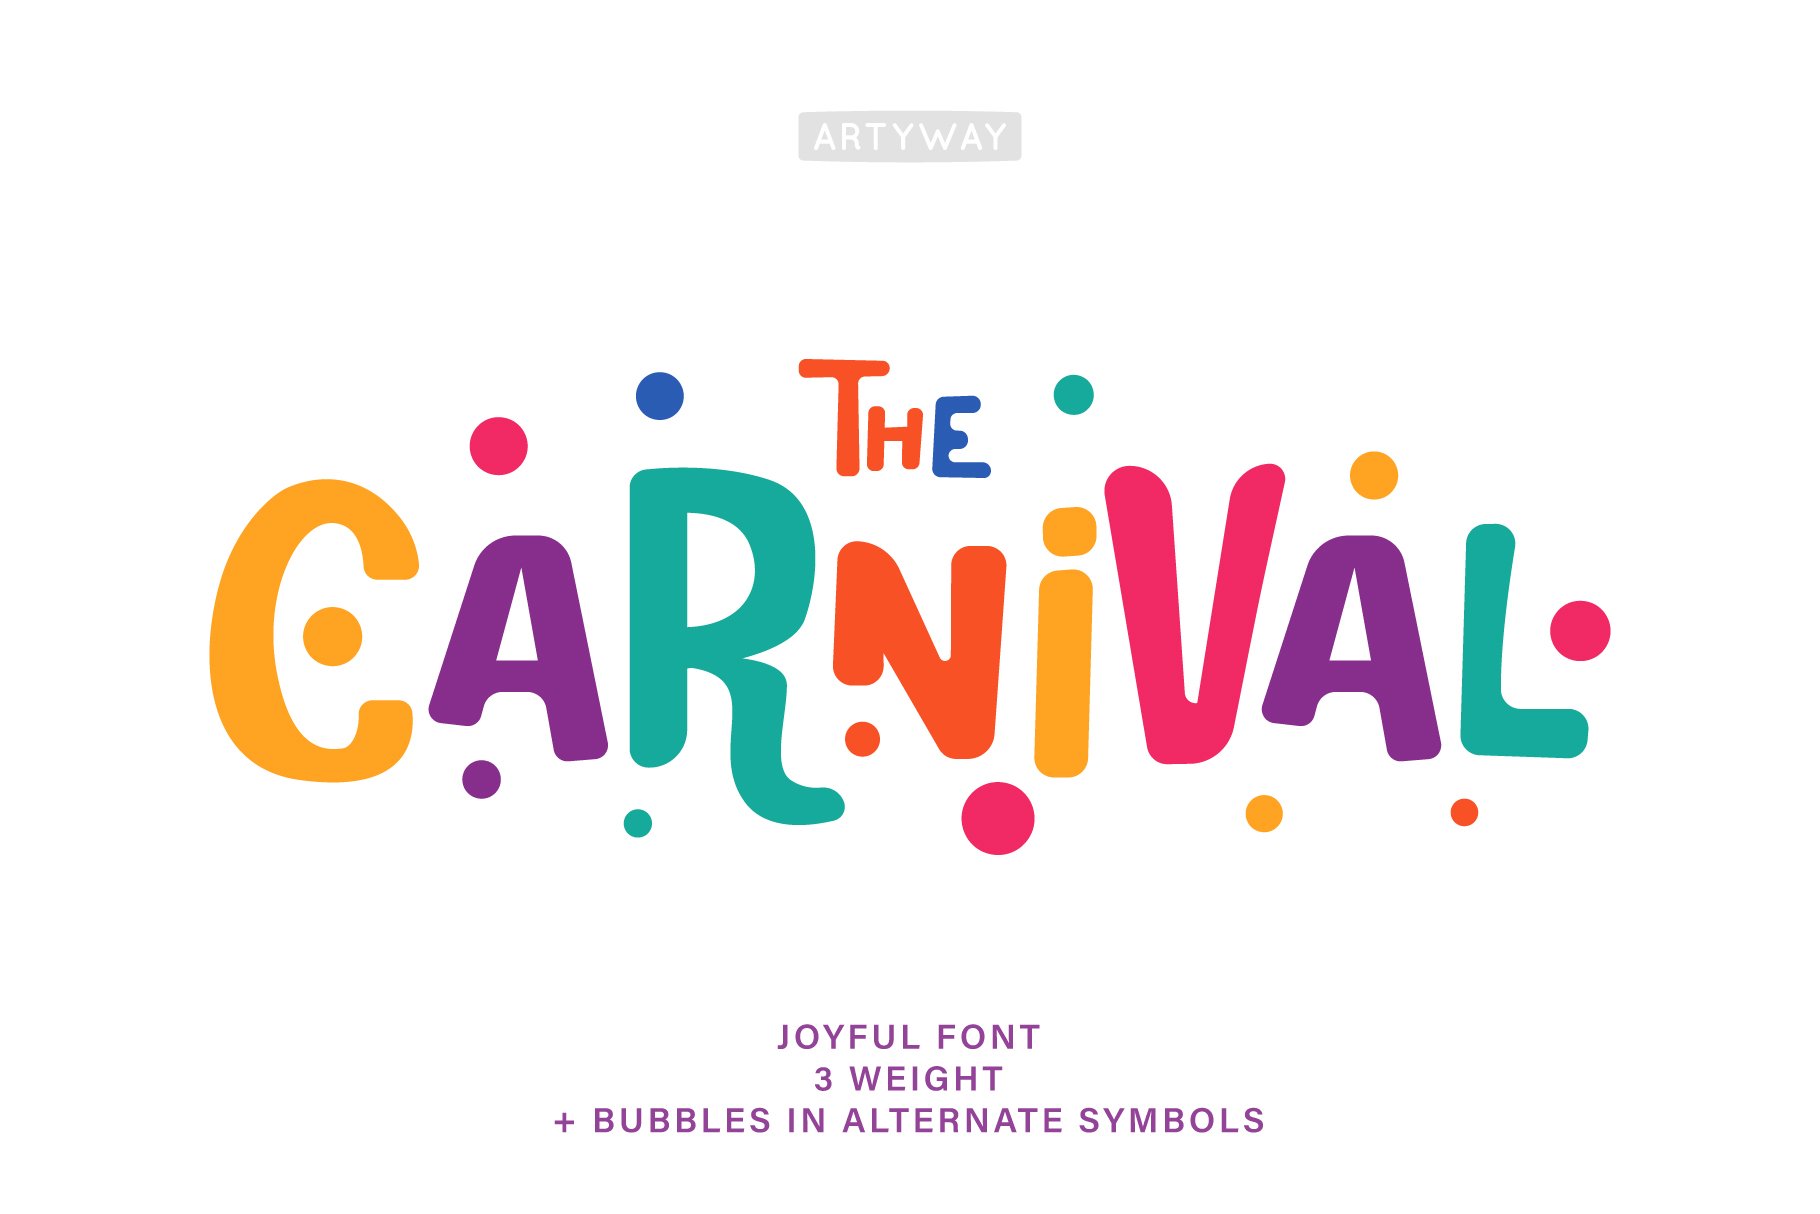 Carnival Fest Font cover image.